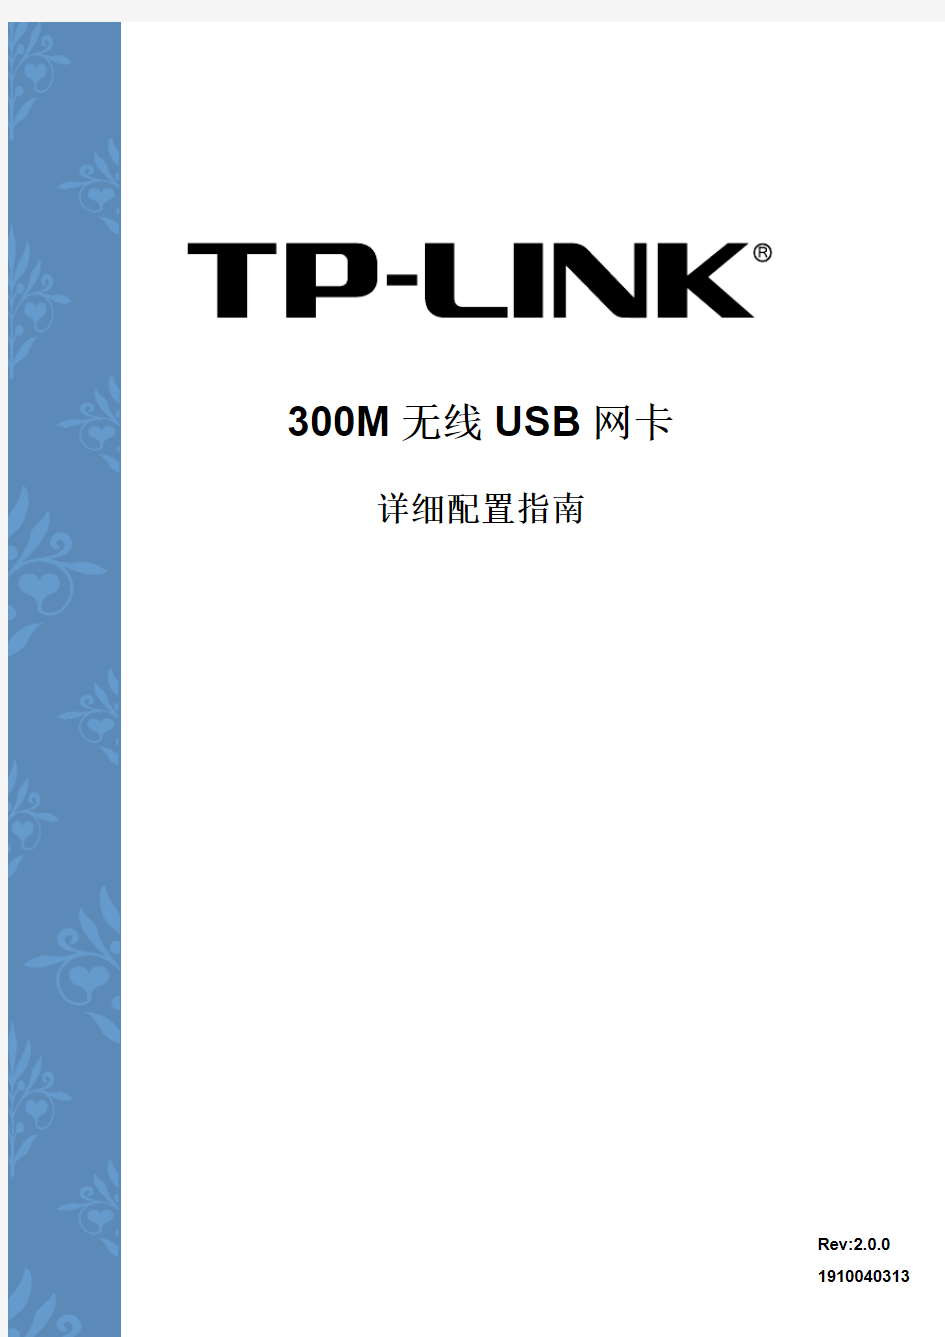 TP-LINK 300M无线USB网卡配置指南